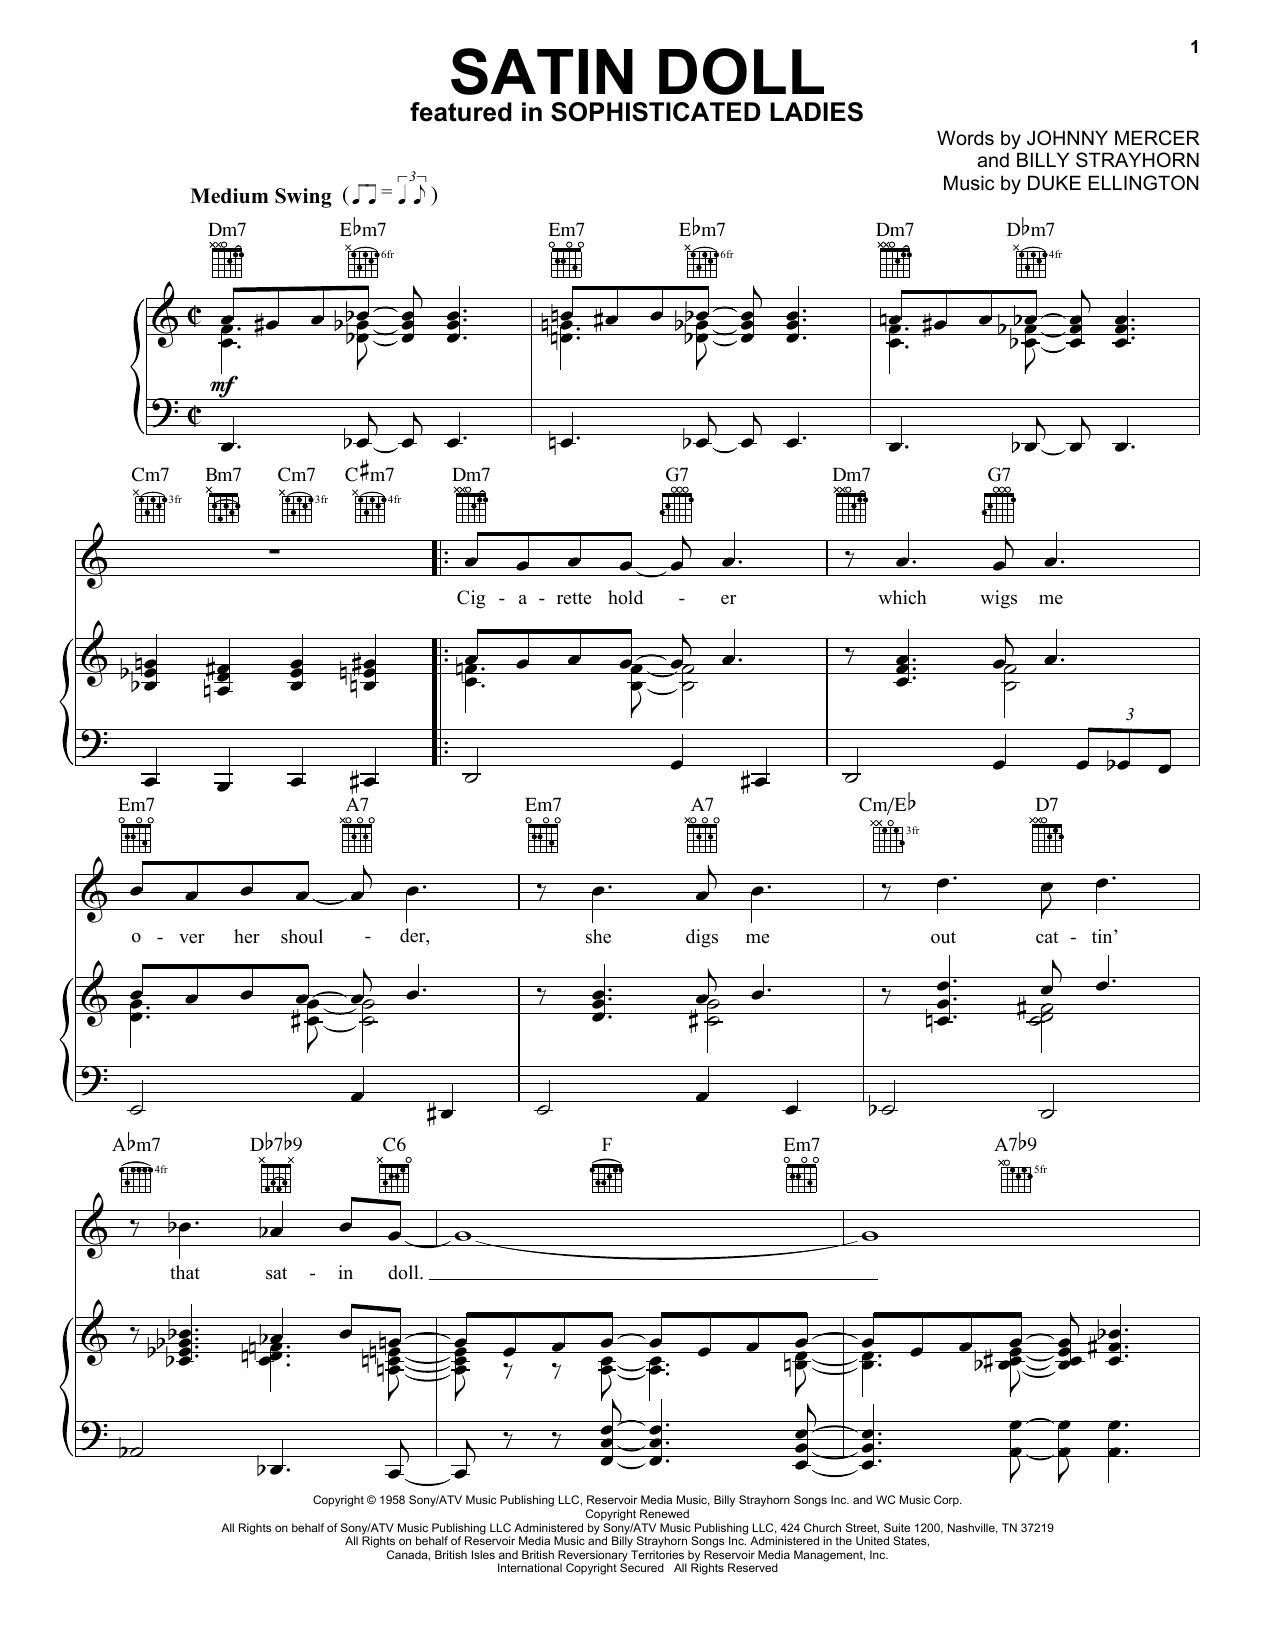 Duke Ellington Satin Doll sheet music notes and chords. Download Printable PDF.